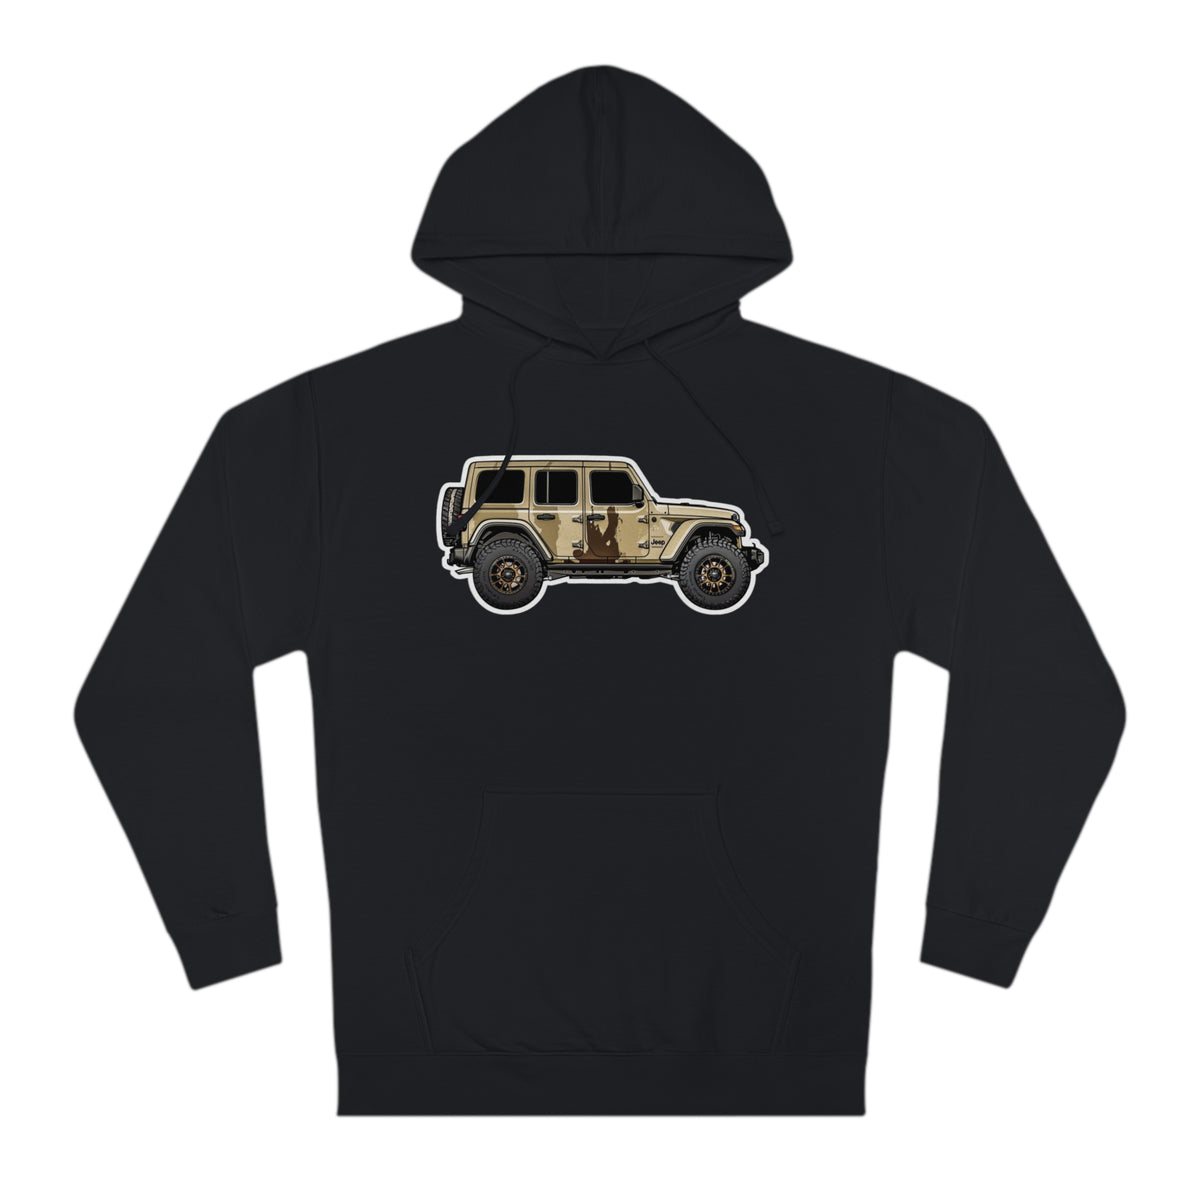 Expedition Trailblazer Hoodie with Mud Badge Jeep Graphic Hooded Sweatshirt